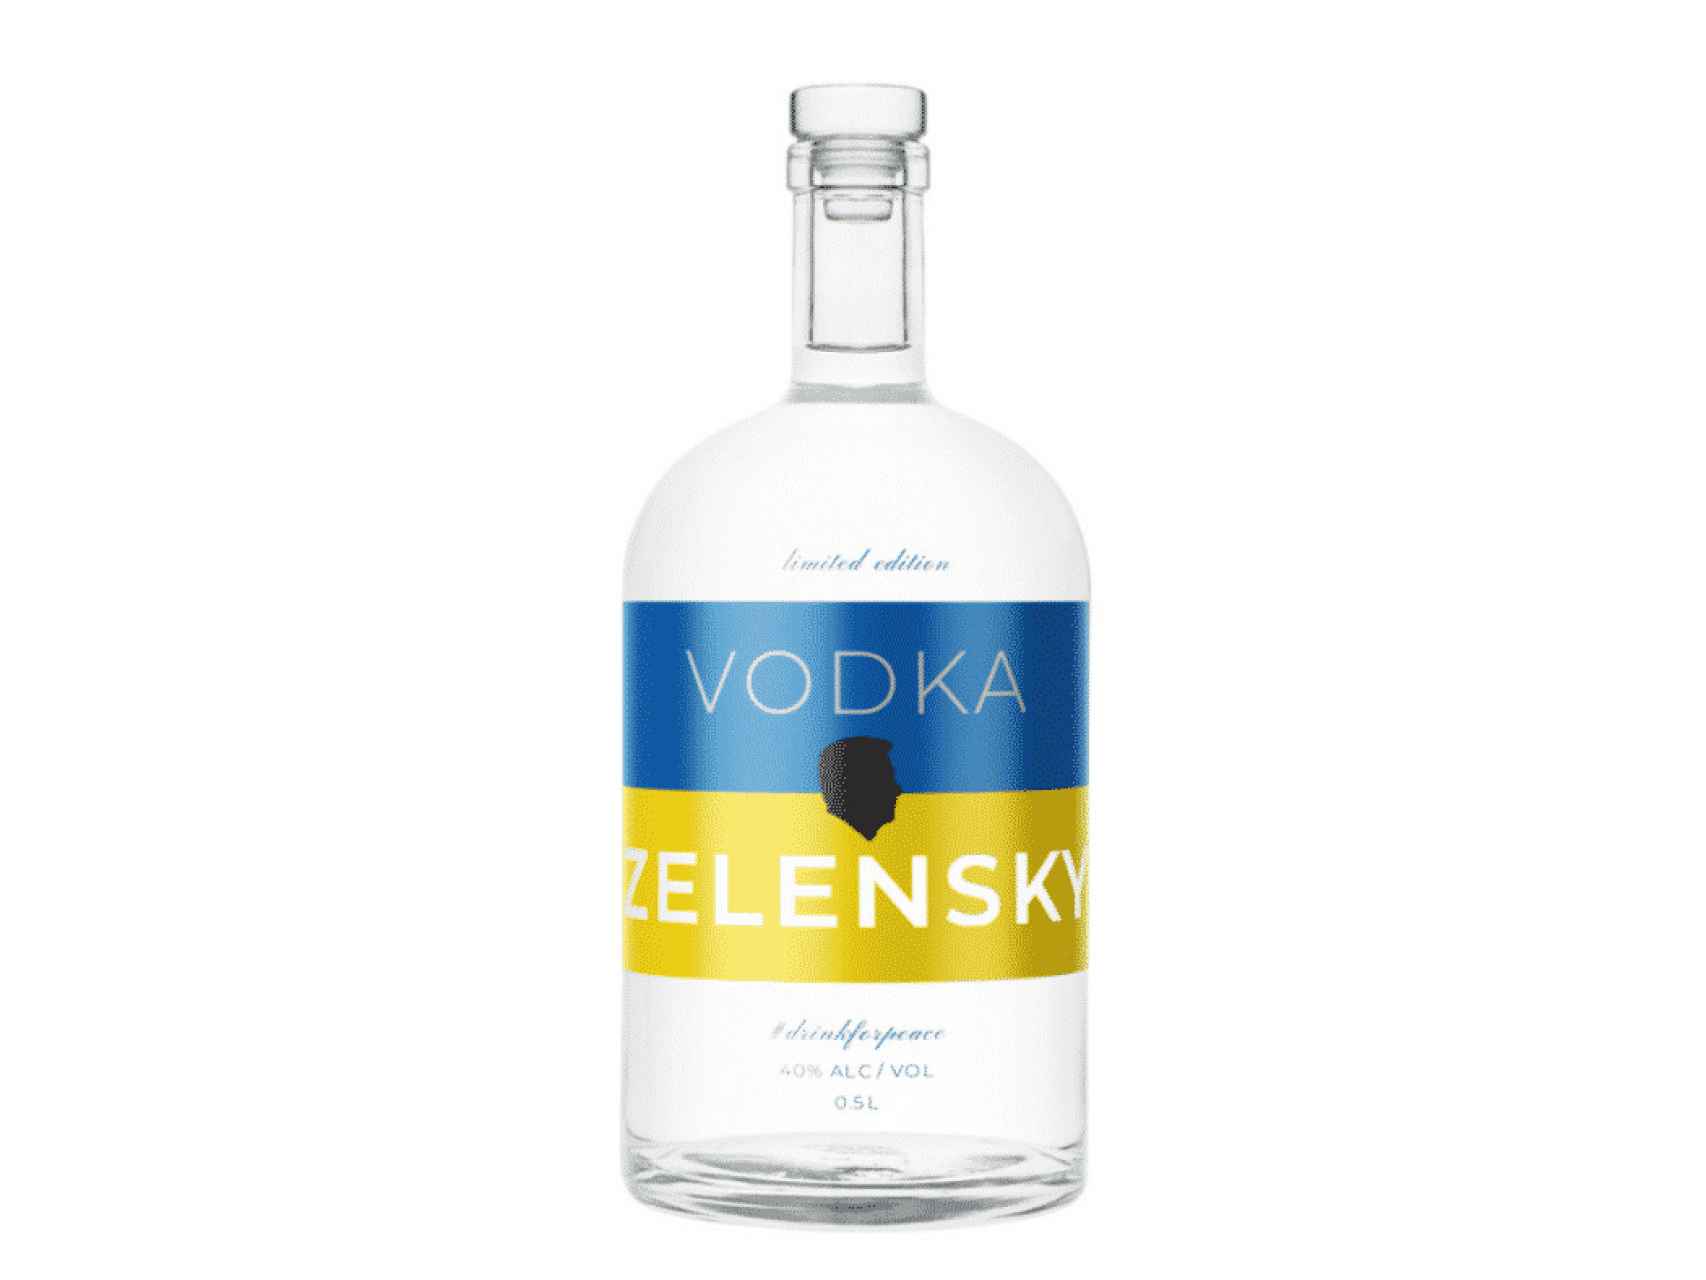 Diseño de la botella del Vodka Zelensky.